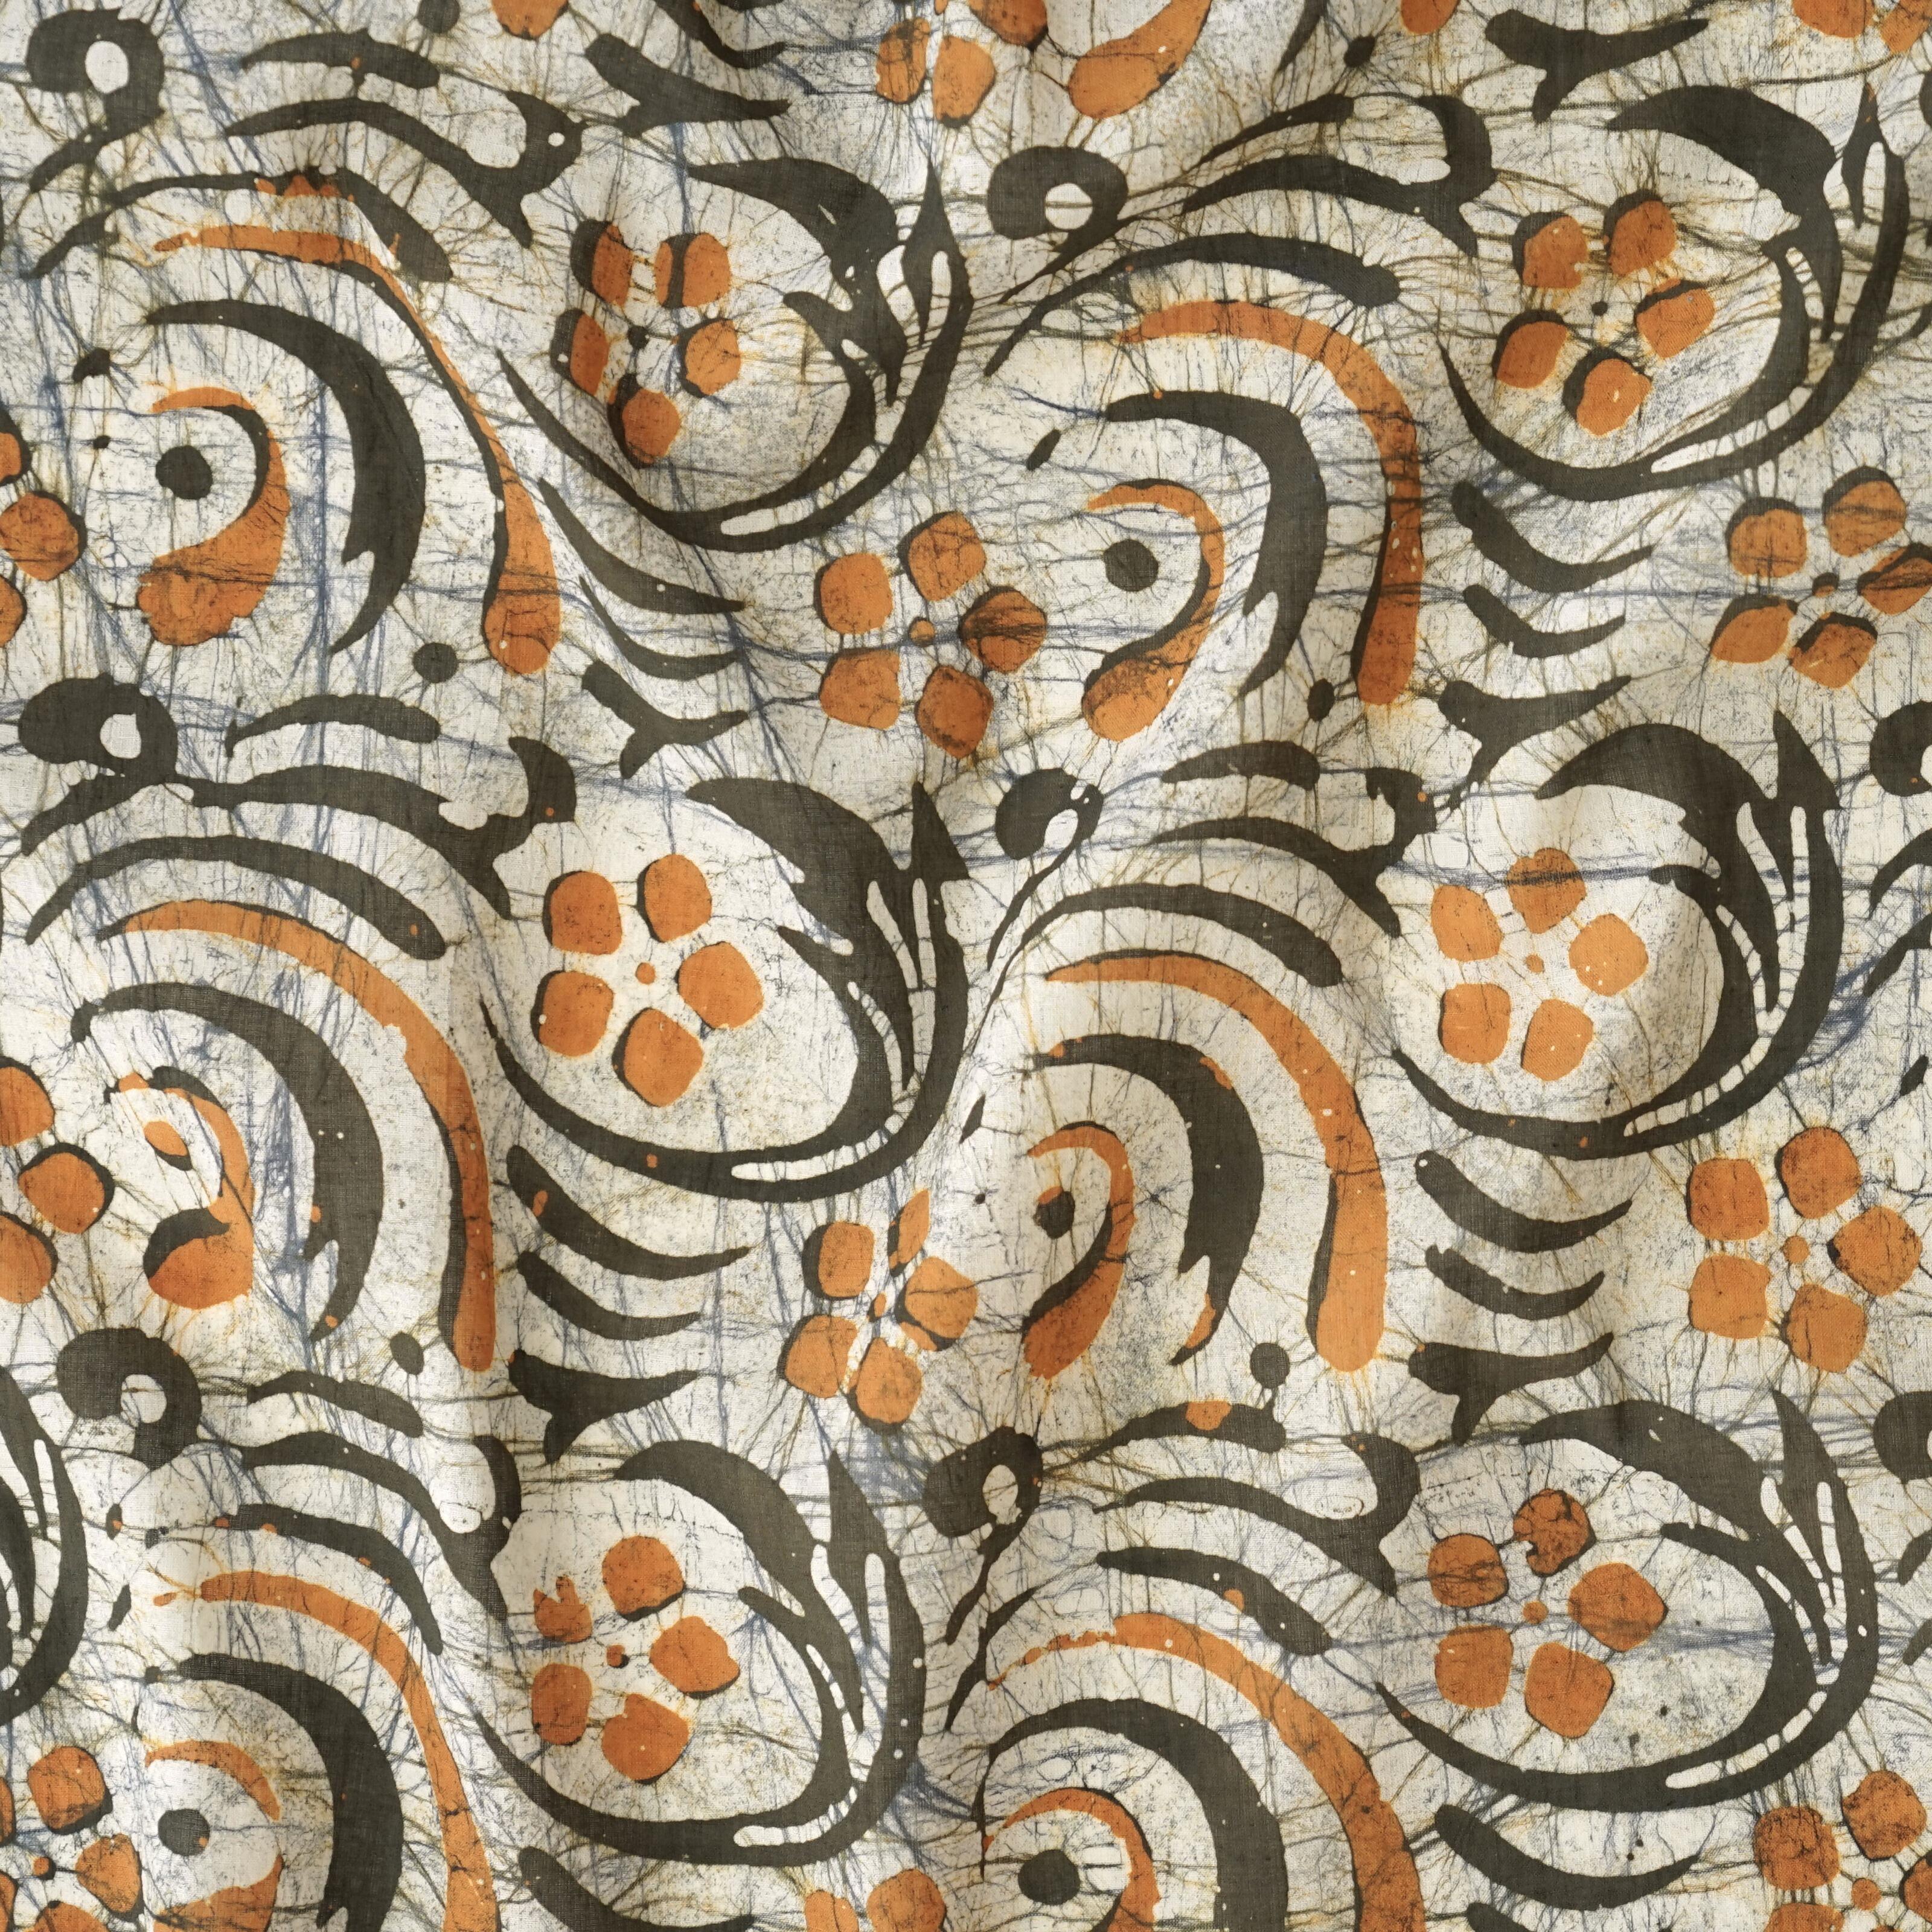 100% Block-Printed Batik Cotton Fabric From India - Stirred Not Shaken Motif - Contrast